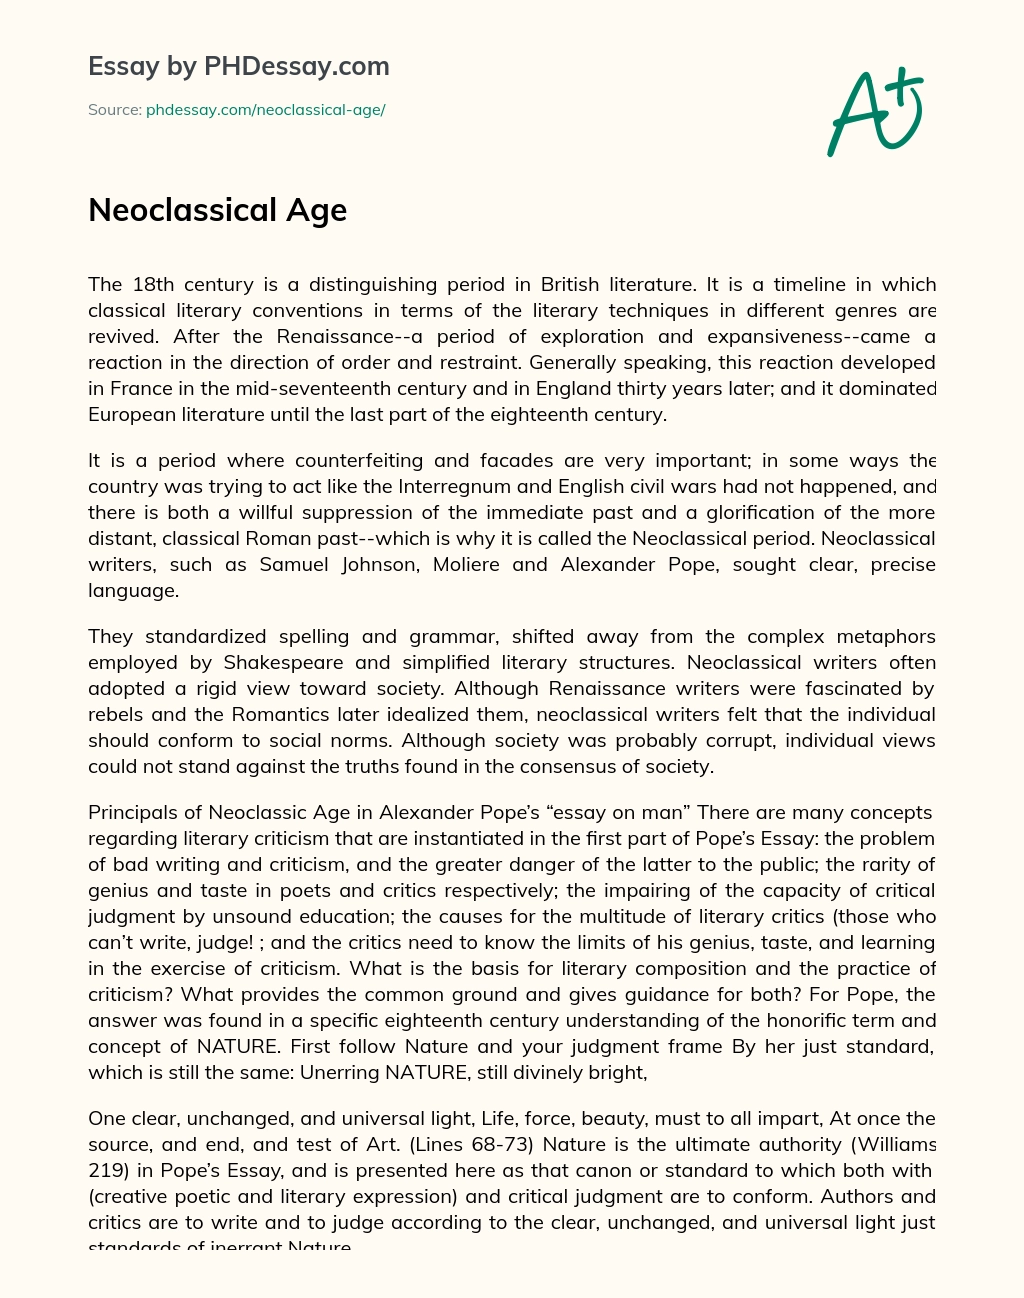 Neoclassical Age essay